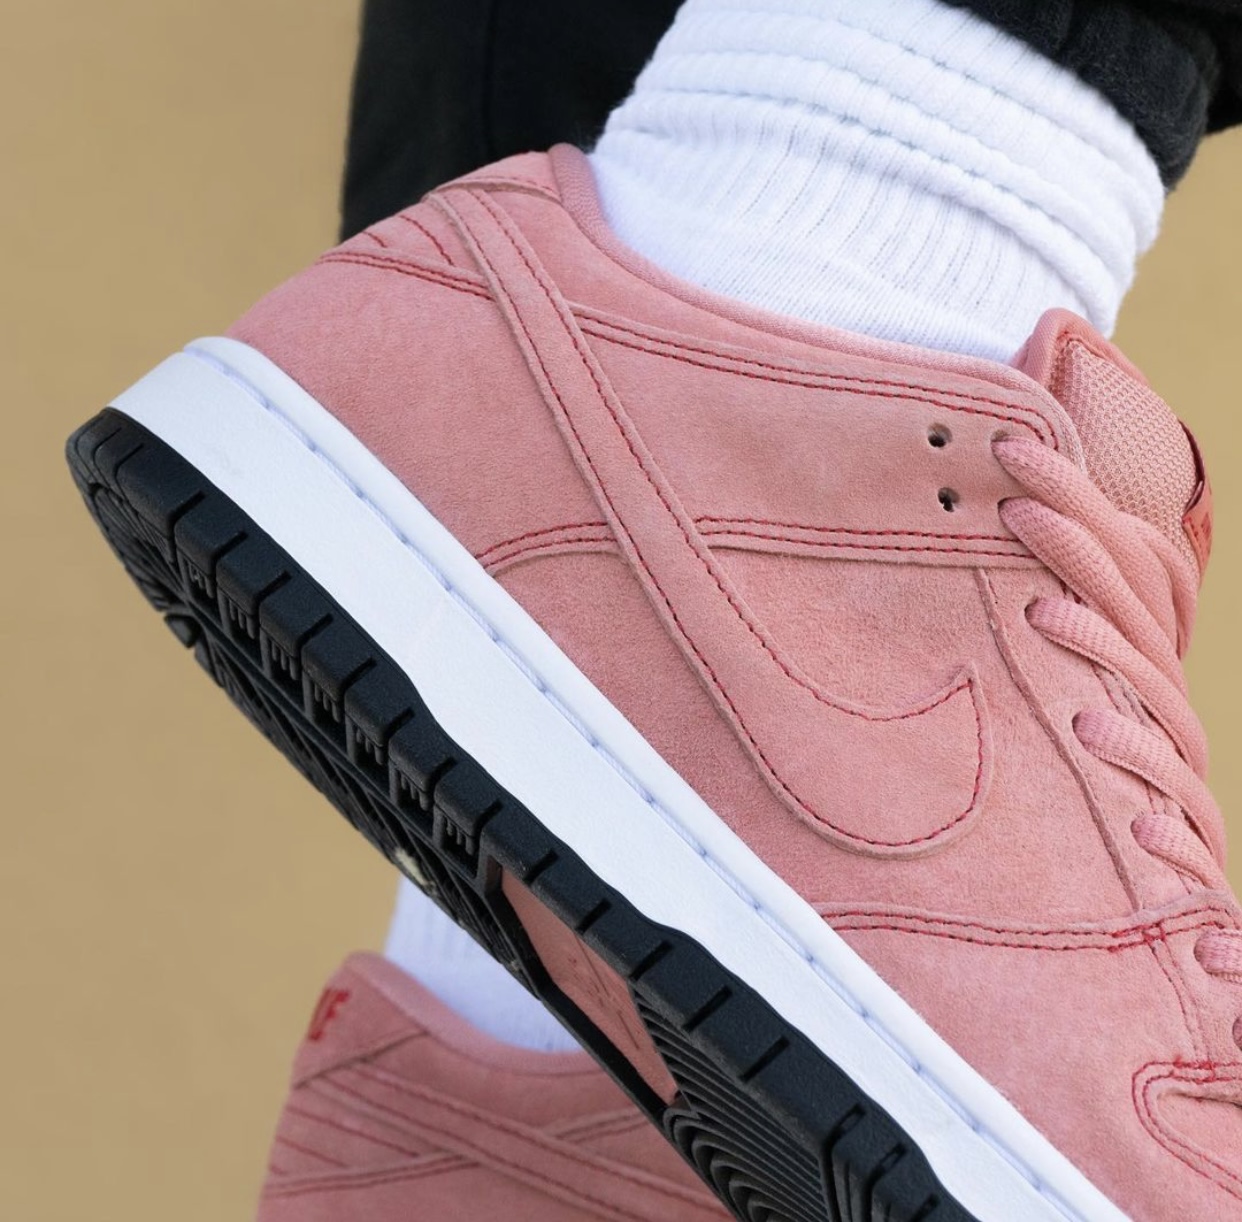 Nike SB Dunk Low Atomic Pink Pig CV1655-600 Release Date On-Feet